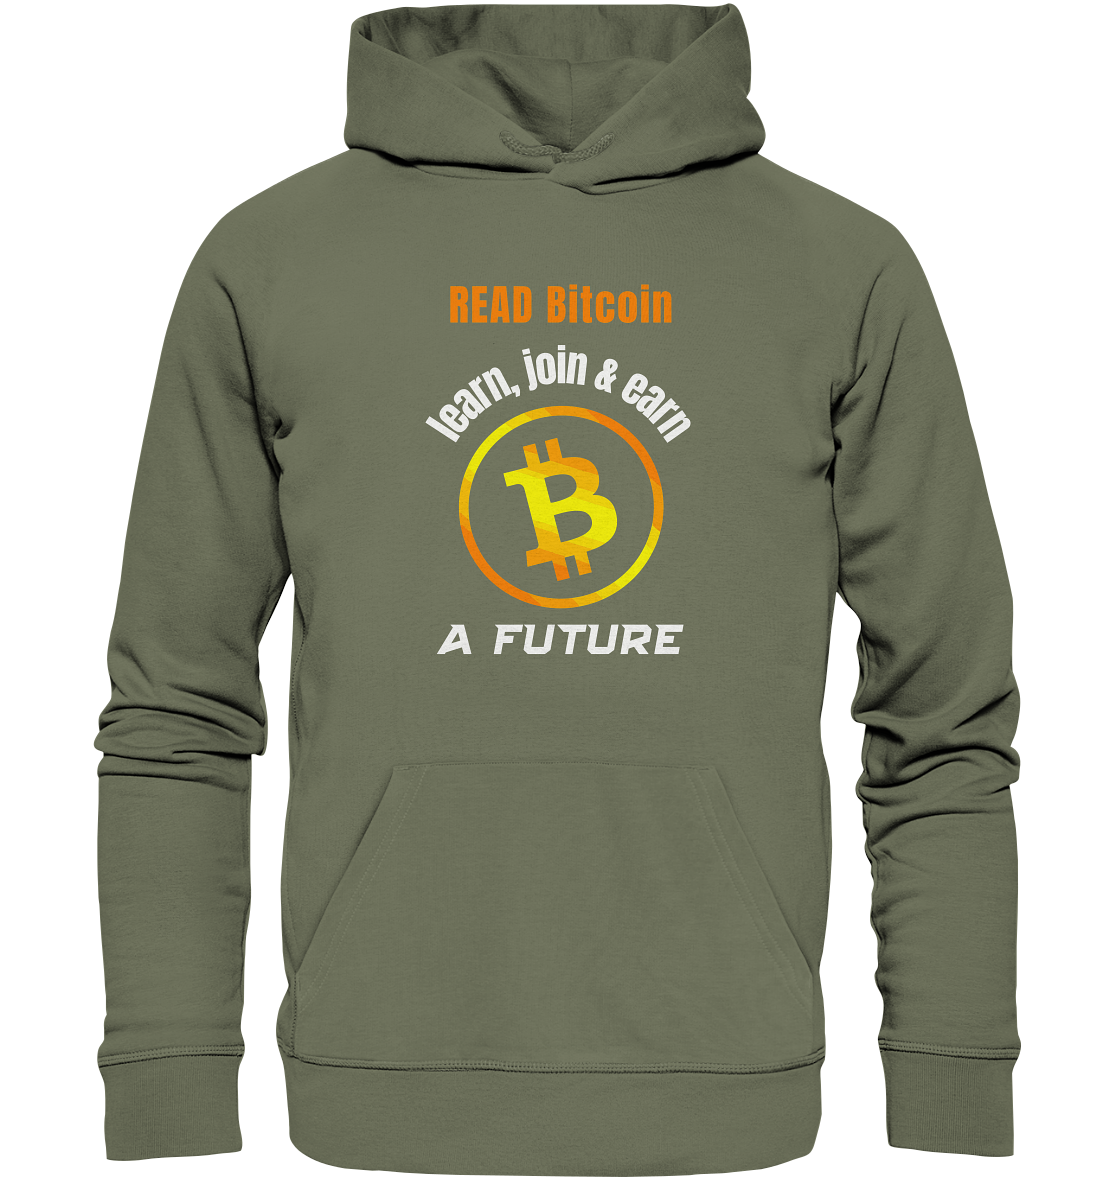 READ BITCOIN, learn & earn A FUTURE - Premium Unisex Hoodie